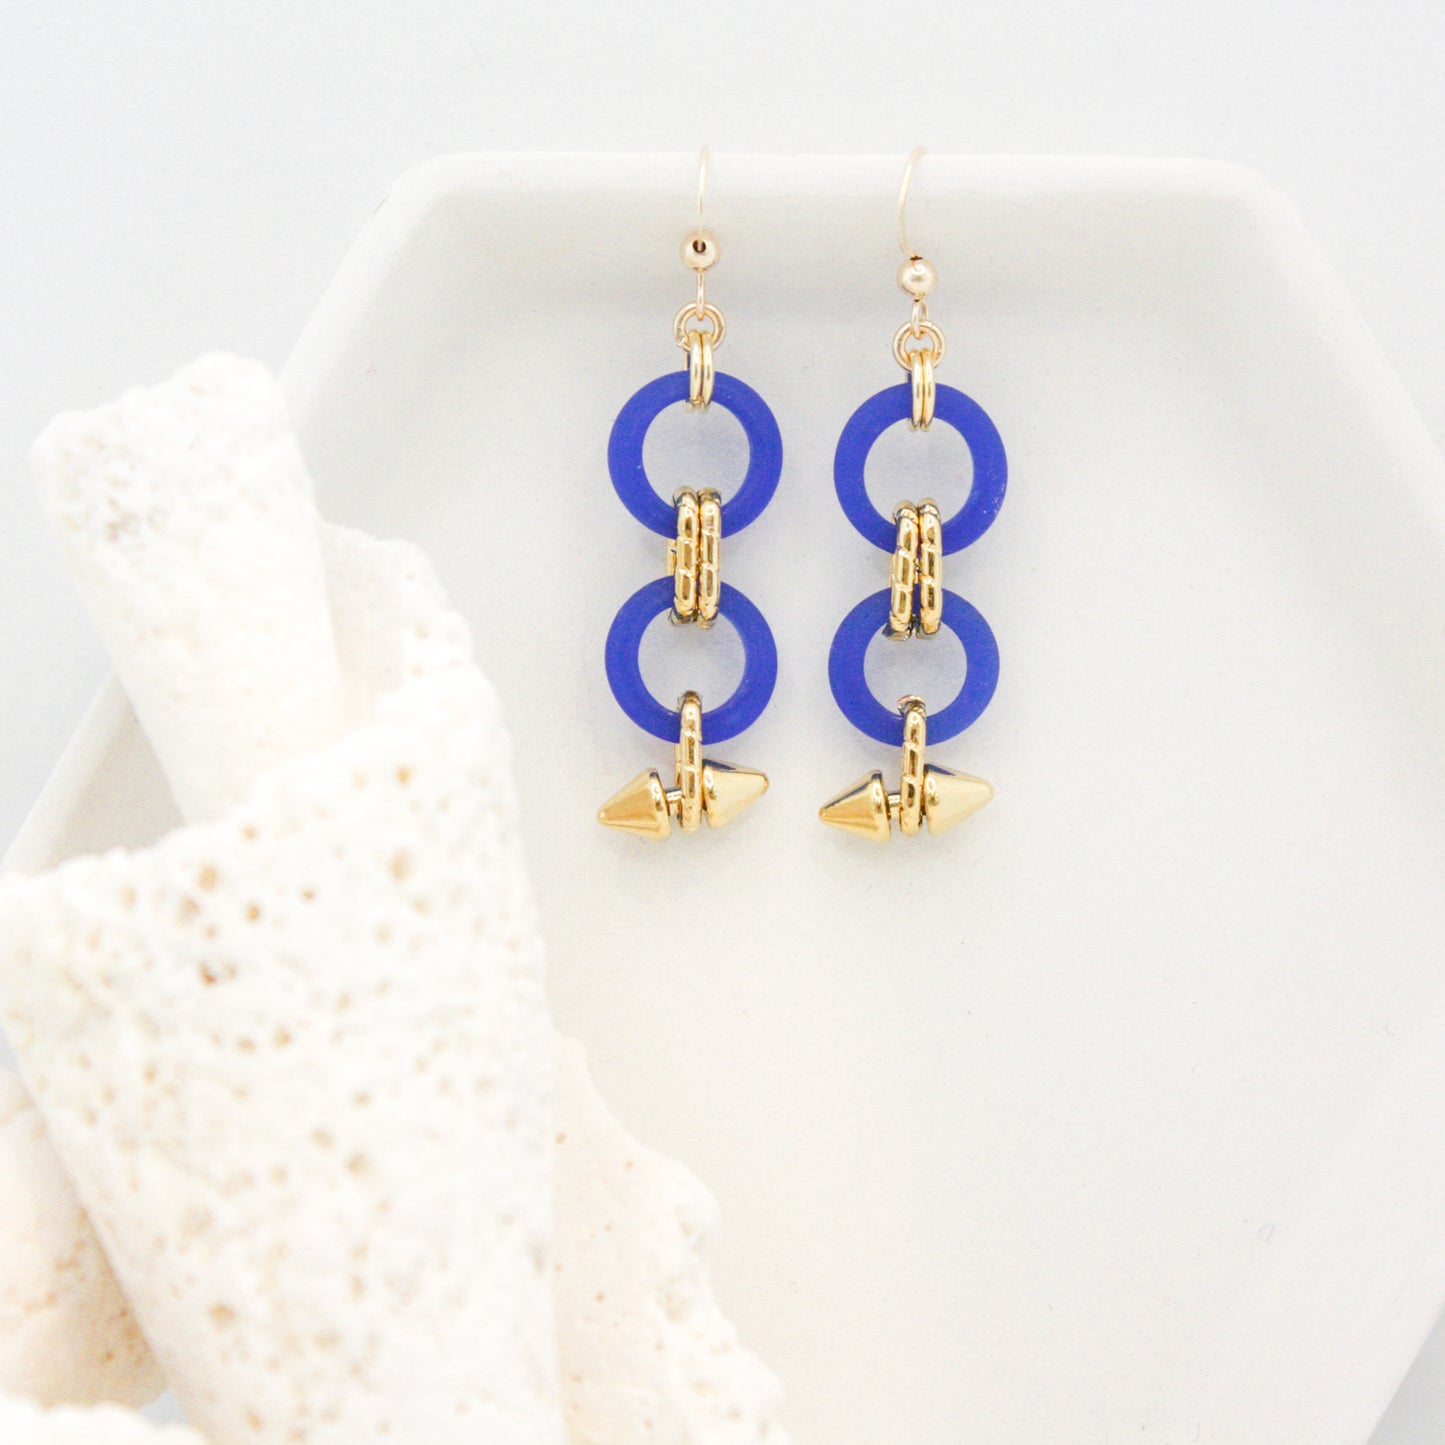 Caldera Glass & Spike Earrings :: 24k Gold Filled